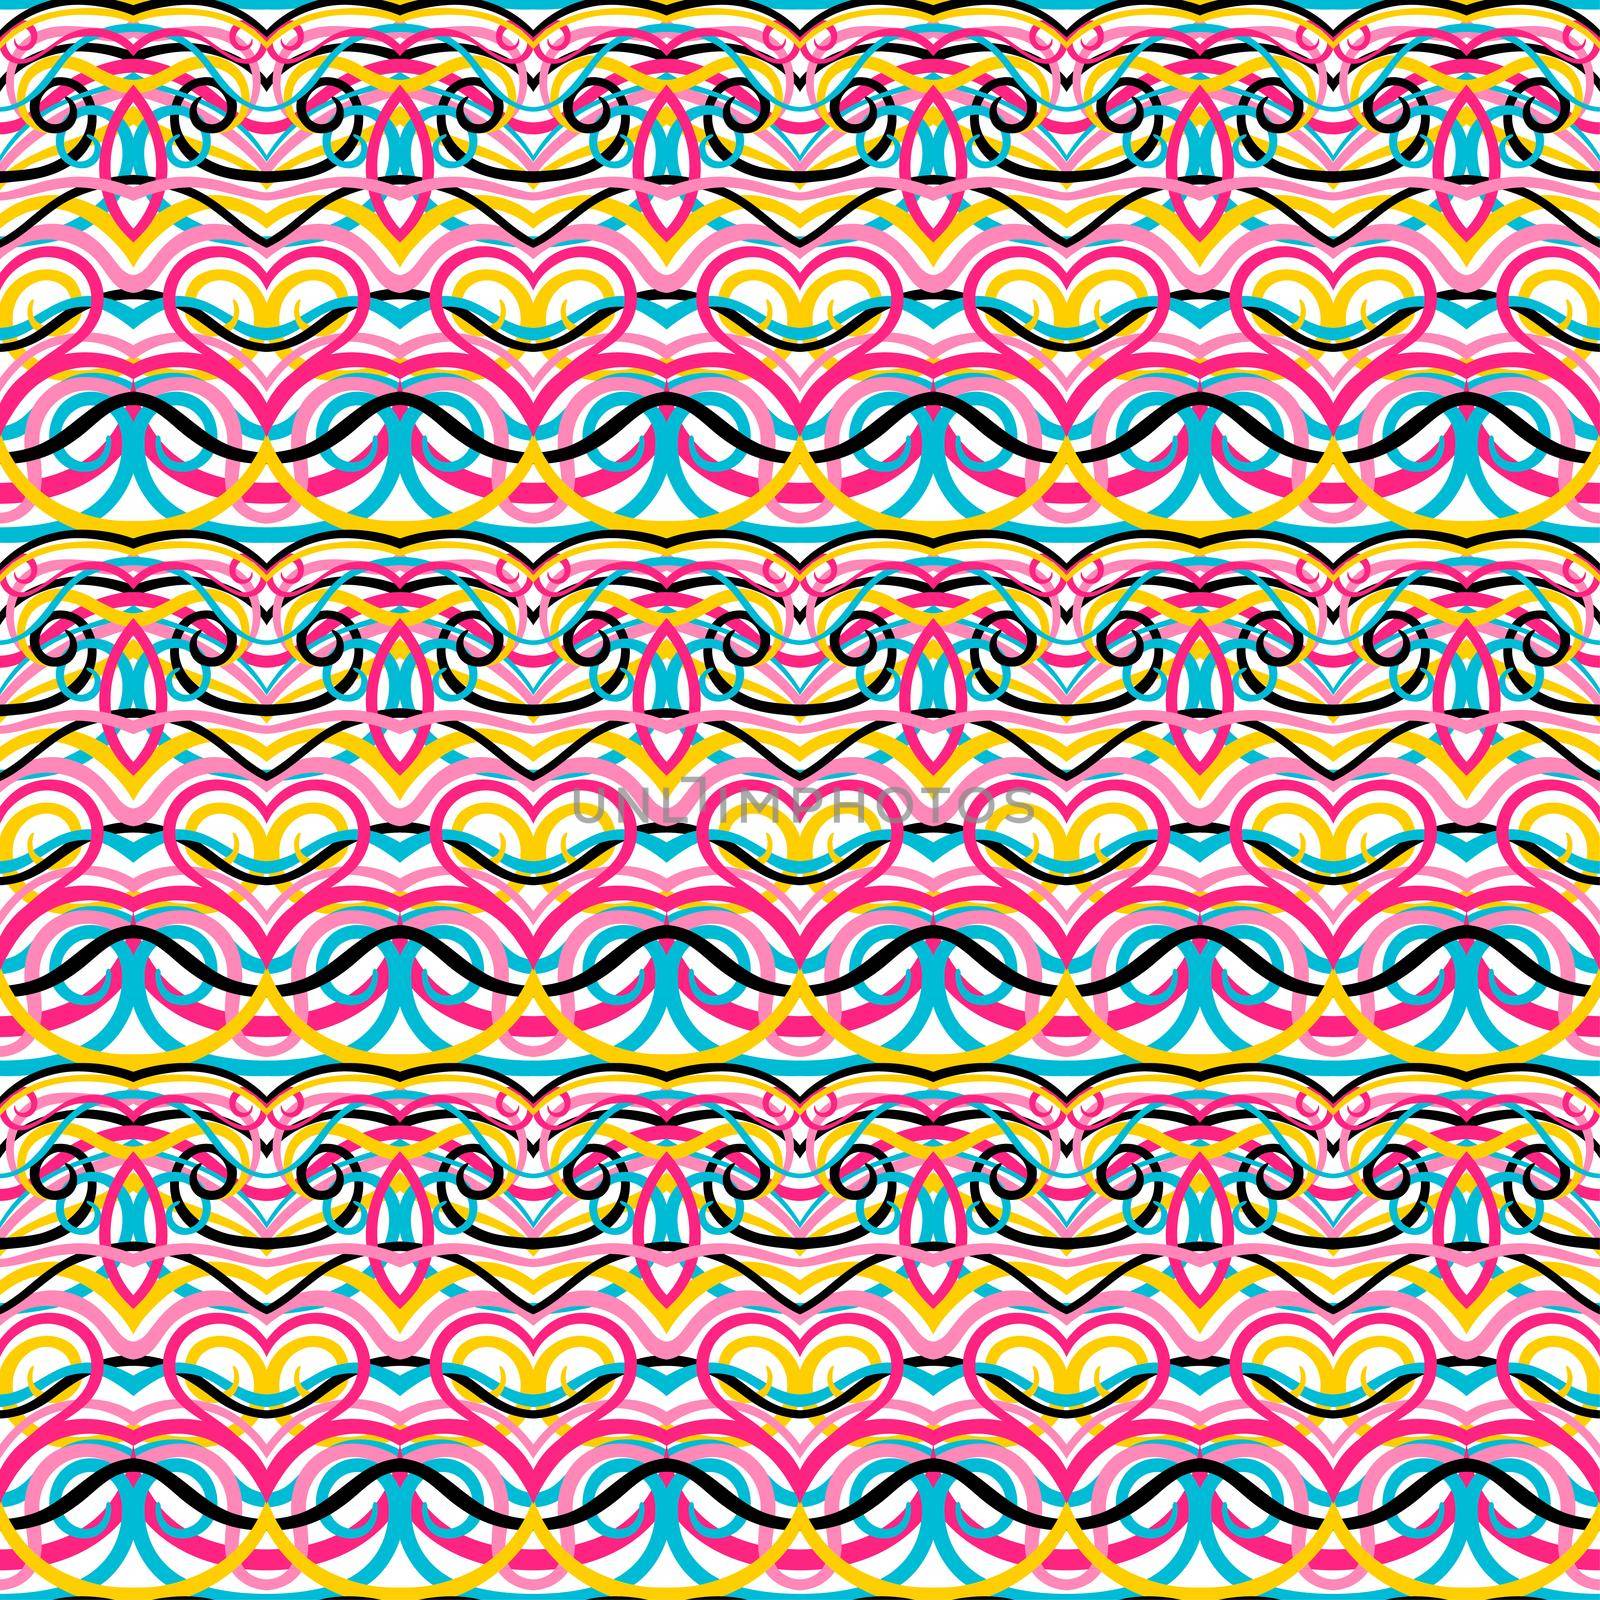 beautiful colorful seamless abstract pattern with swirls